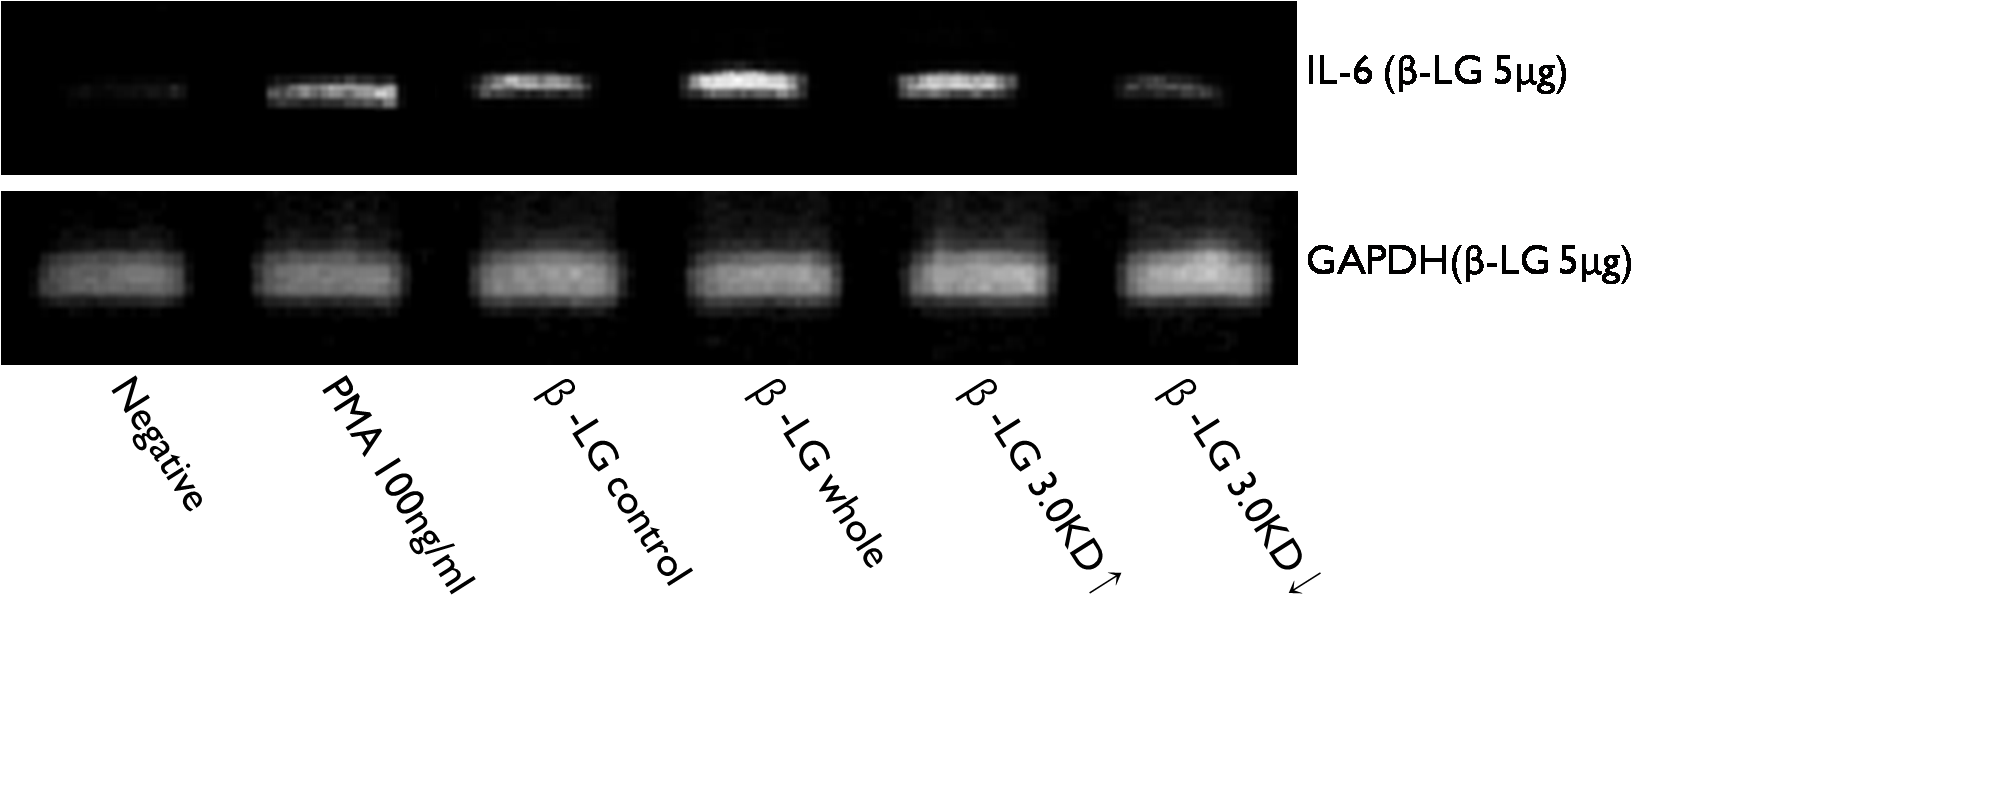 HMC-1 cell에 α-Lactoglobulin을 5μg 처리하였을 때 발현되는 IL-6.